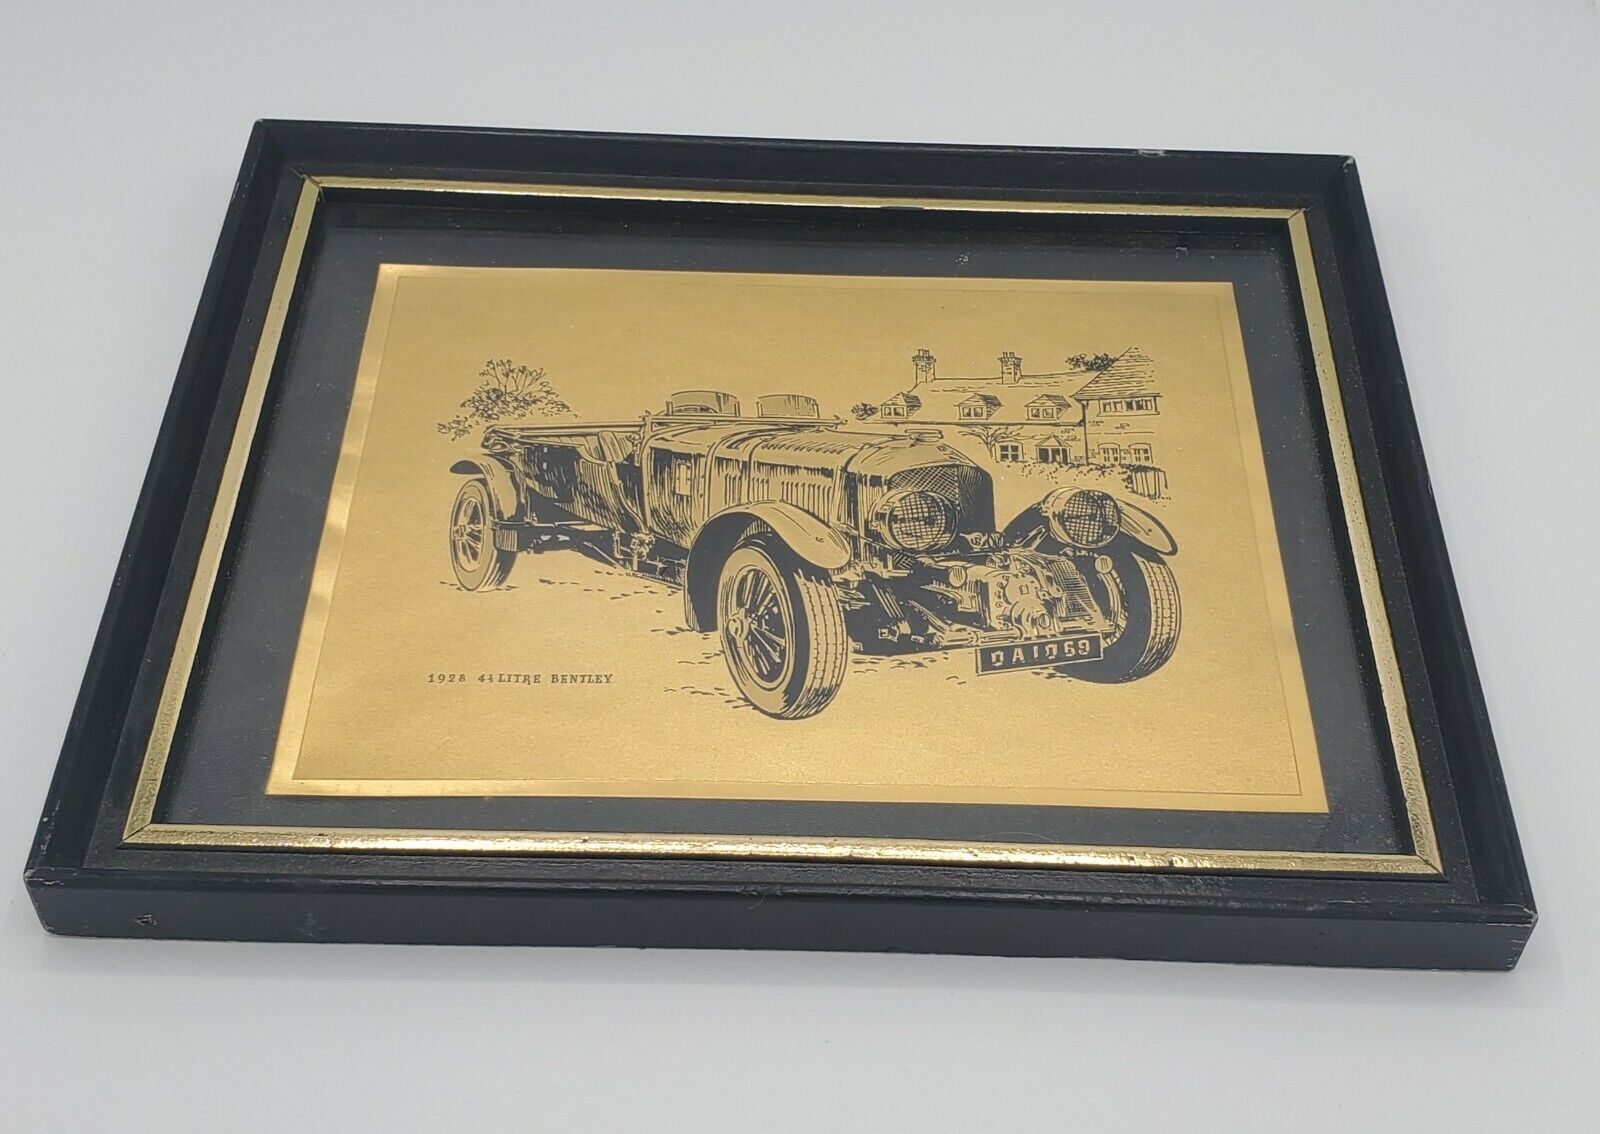 1928 4.5 Litre Bentley gold foil art WITH FRAME